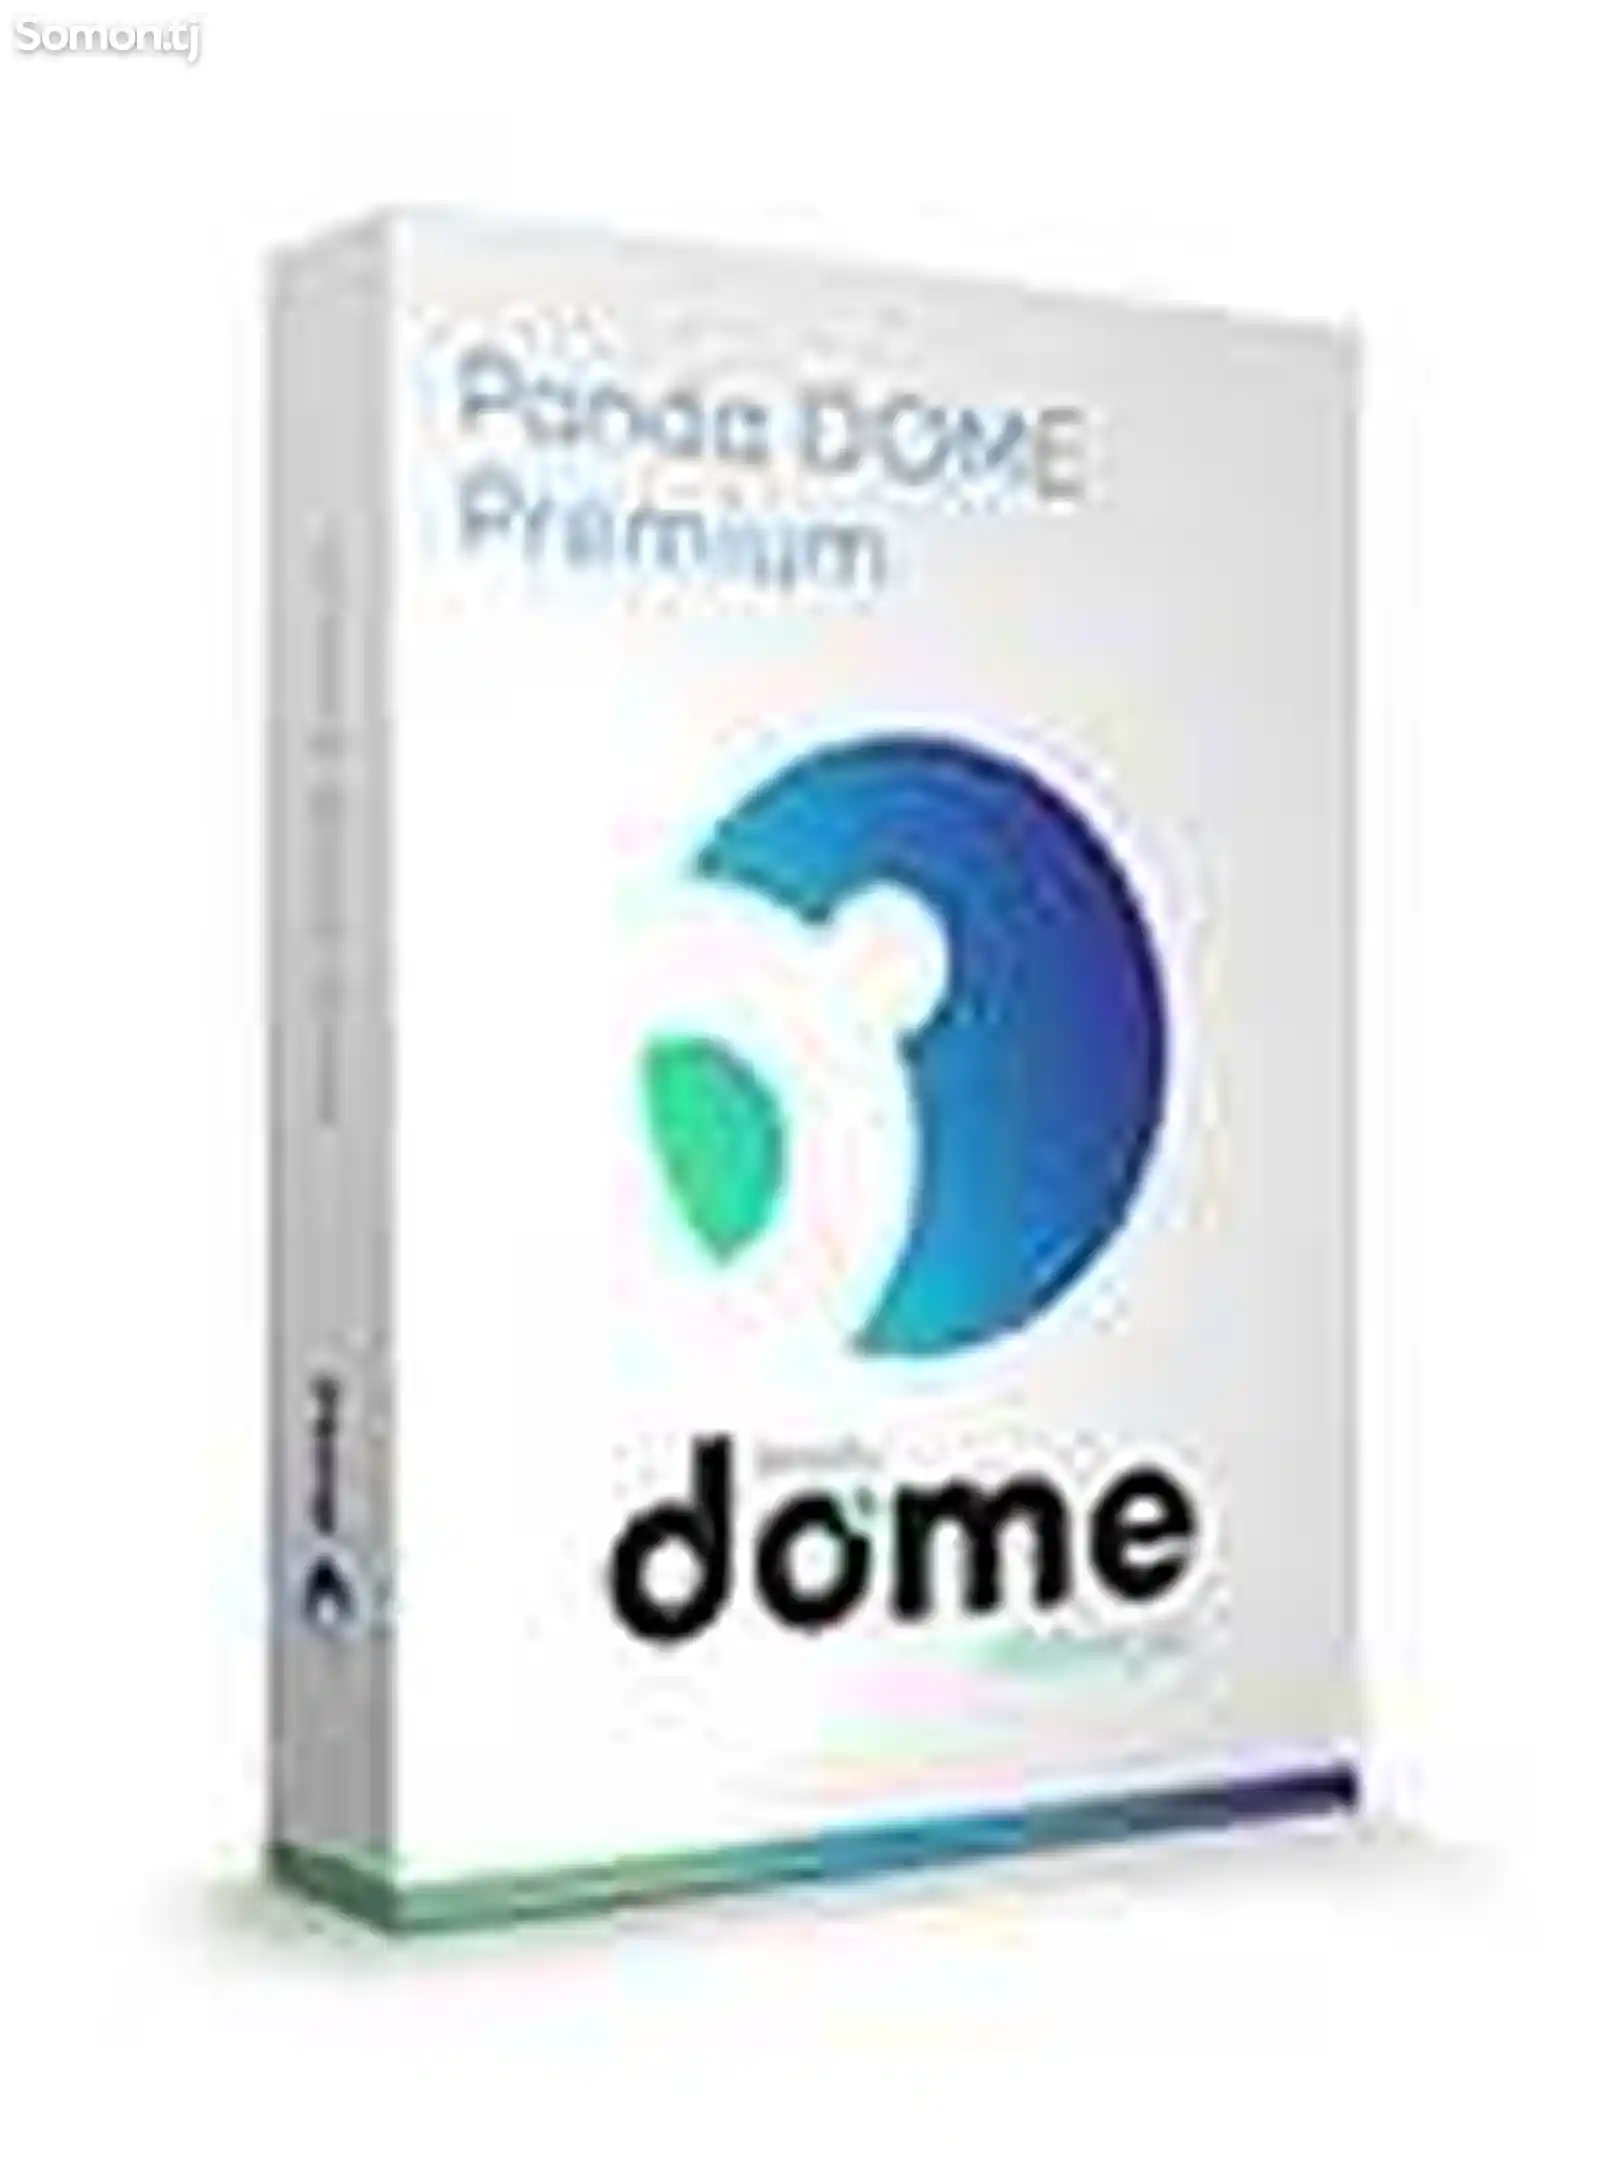 Panda Dome Premium - иҷозатнома барои 1 роёна, 1 сол